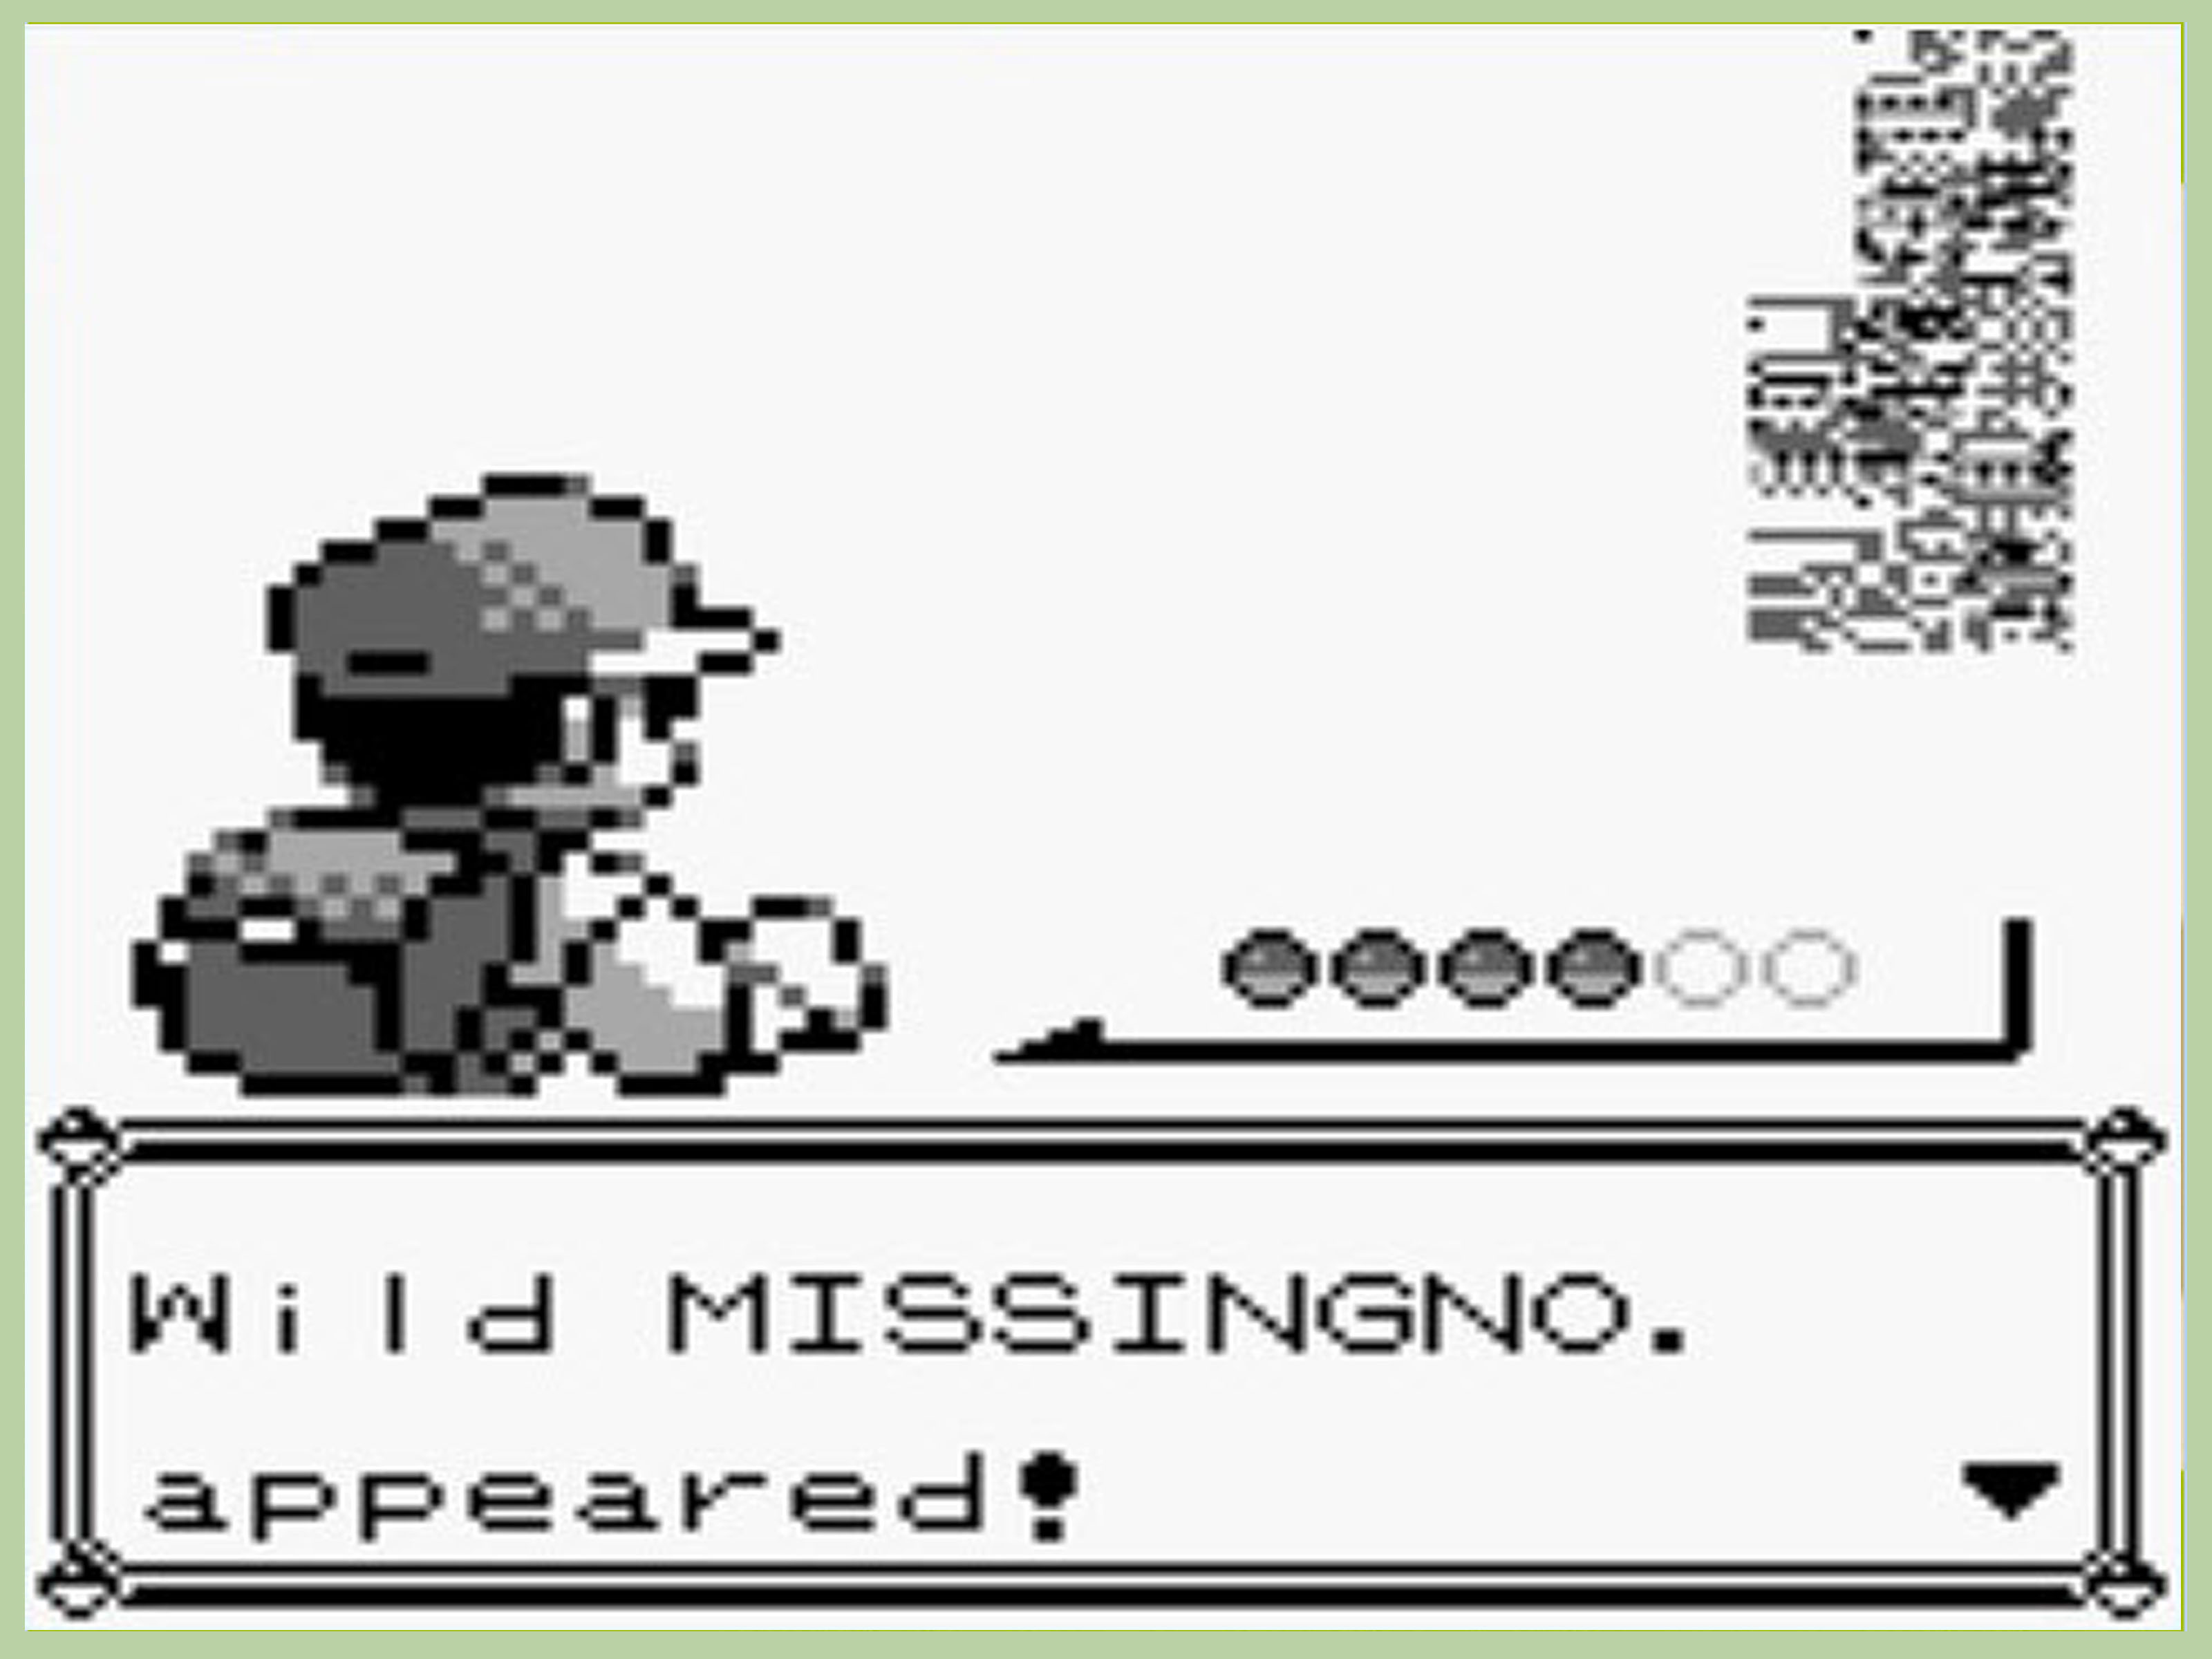 Pokémon e mistero missingno